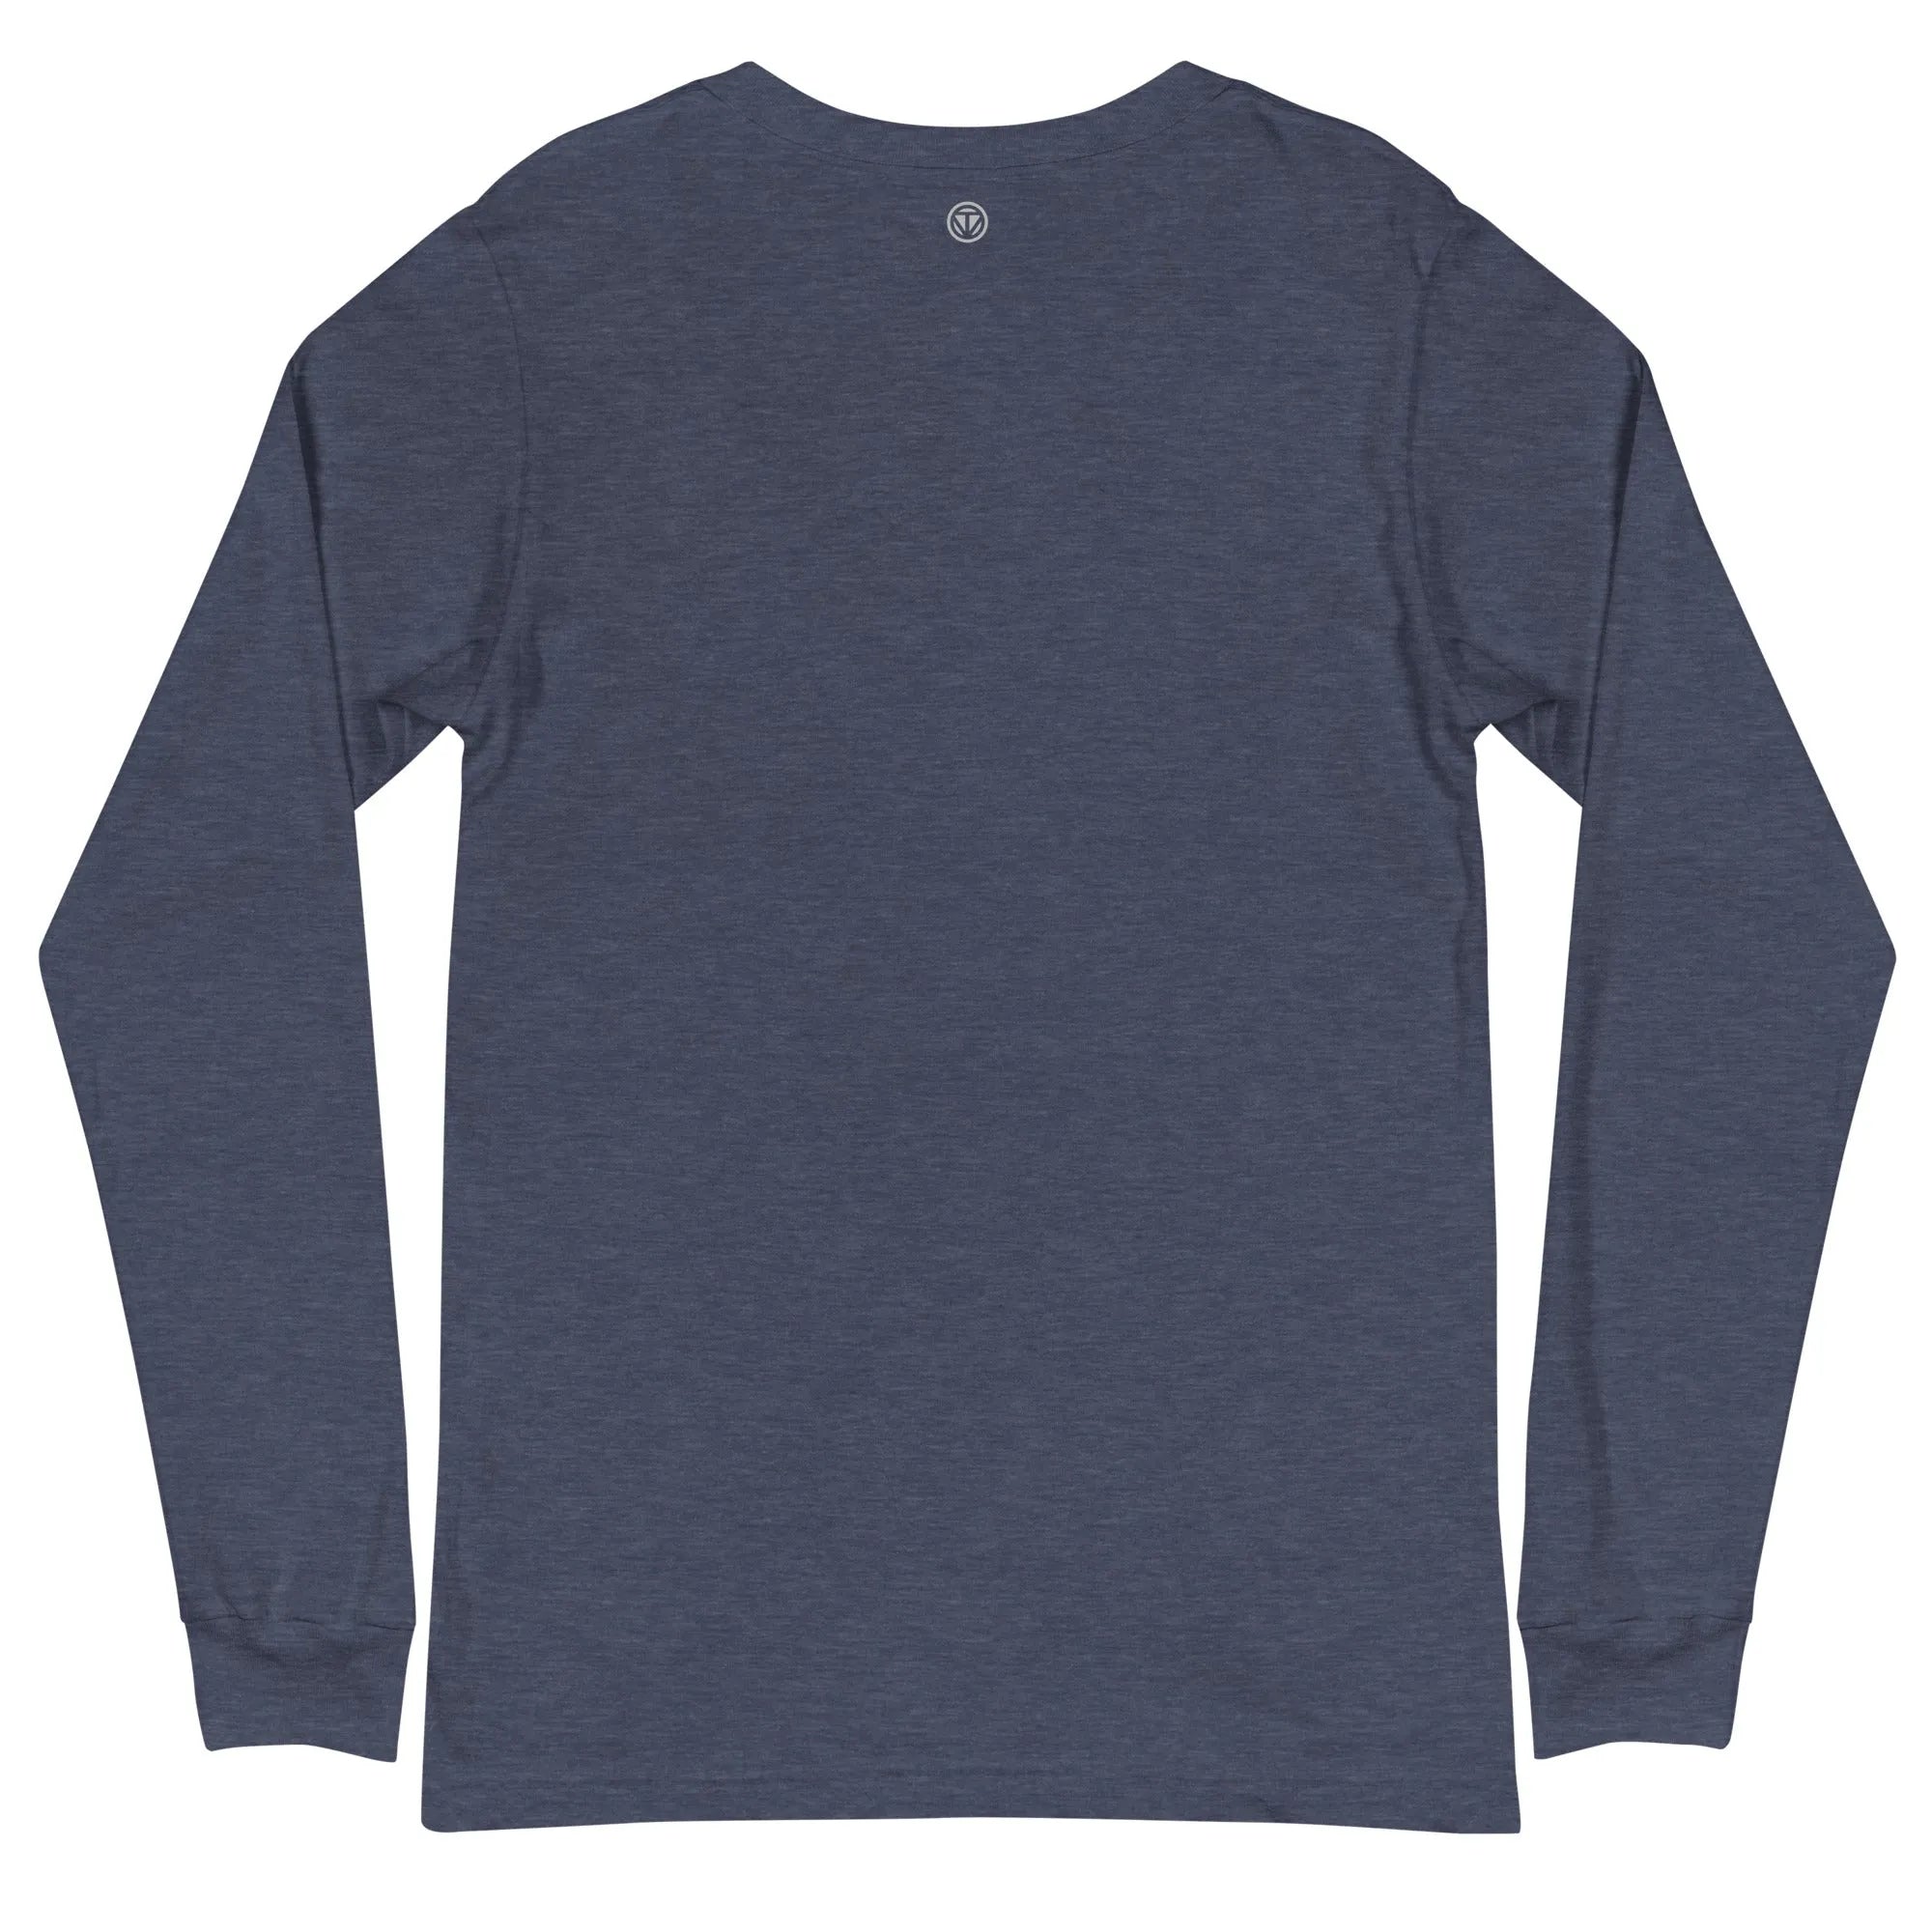 Langarm Baumwoll T-Shirt VIBES (Graublau/Silber), Langarm T-Shirts, Time Of Vibes